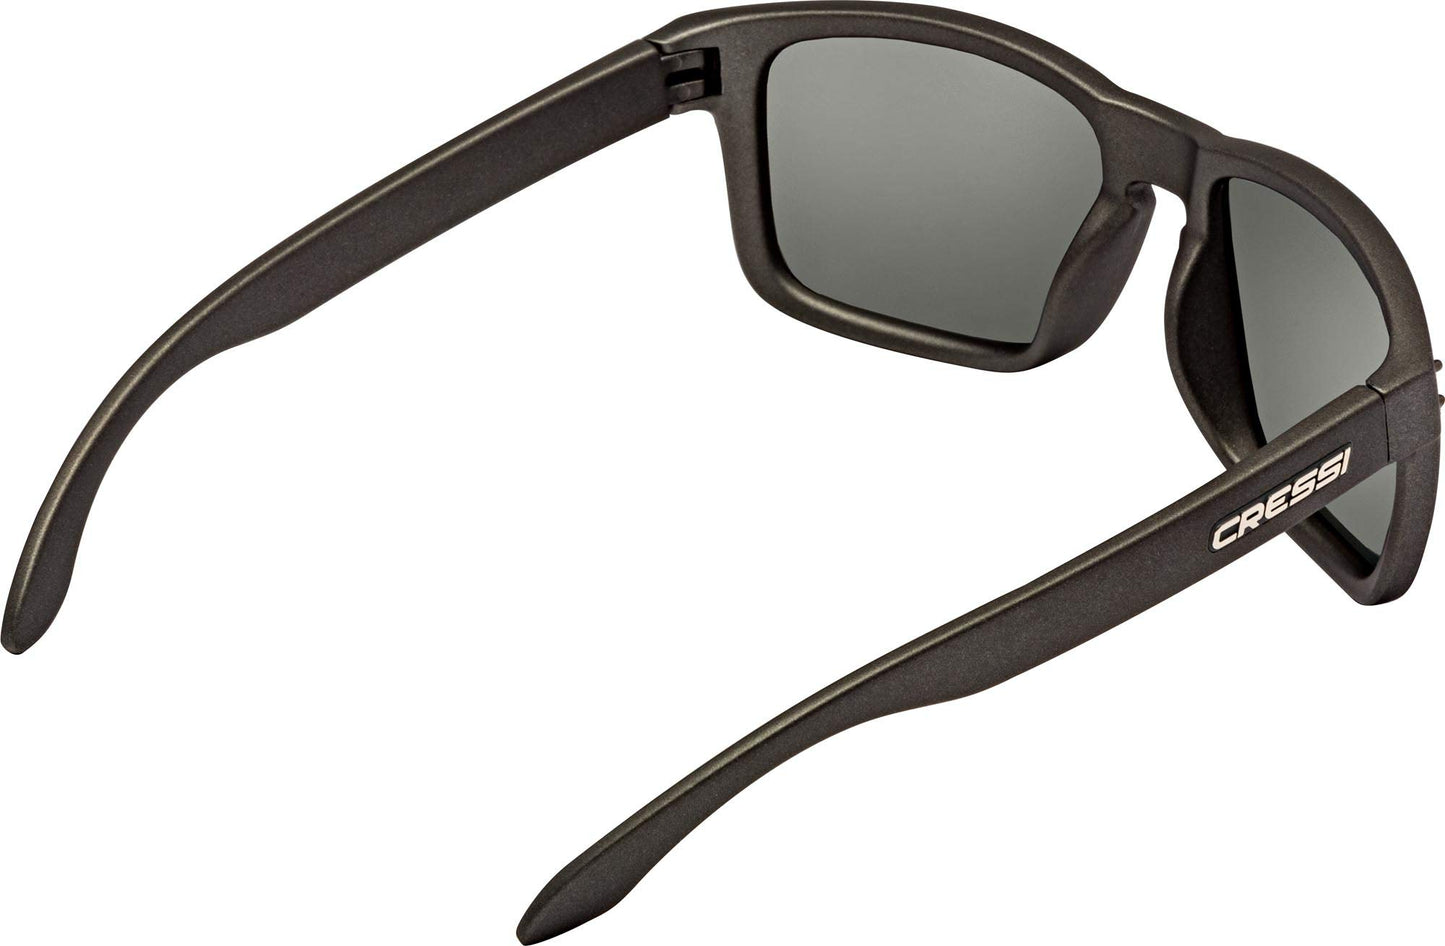 Cressi Unisex Adult Blaze Sunglasses Sport Sunglasses With Polarised Hydrophobic Lenses With Hard Case